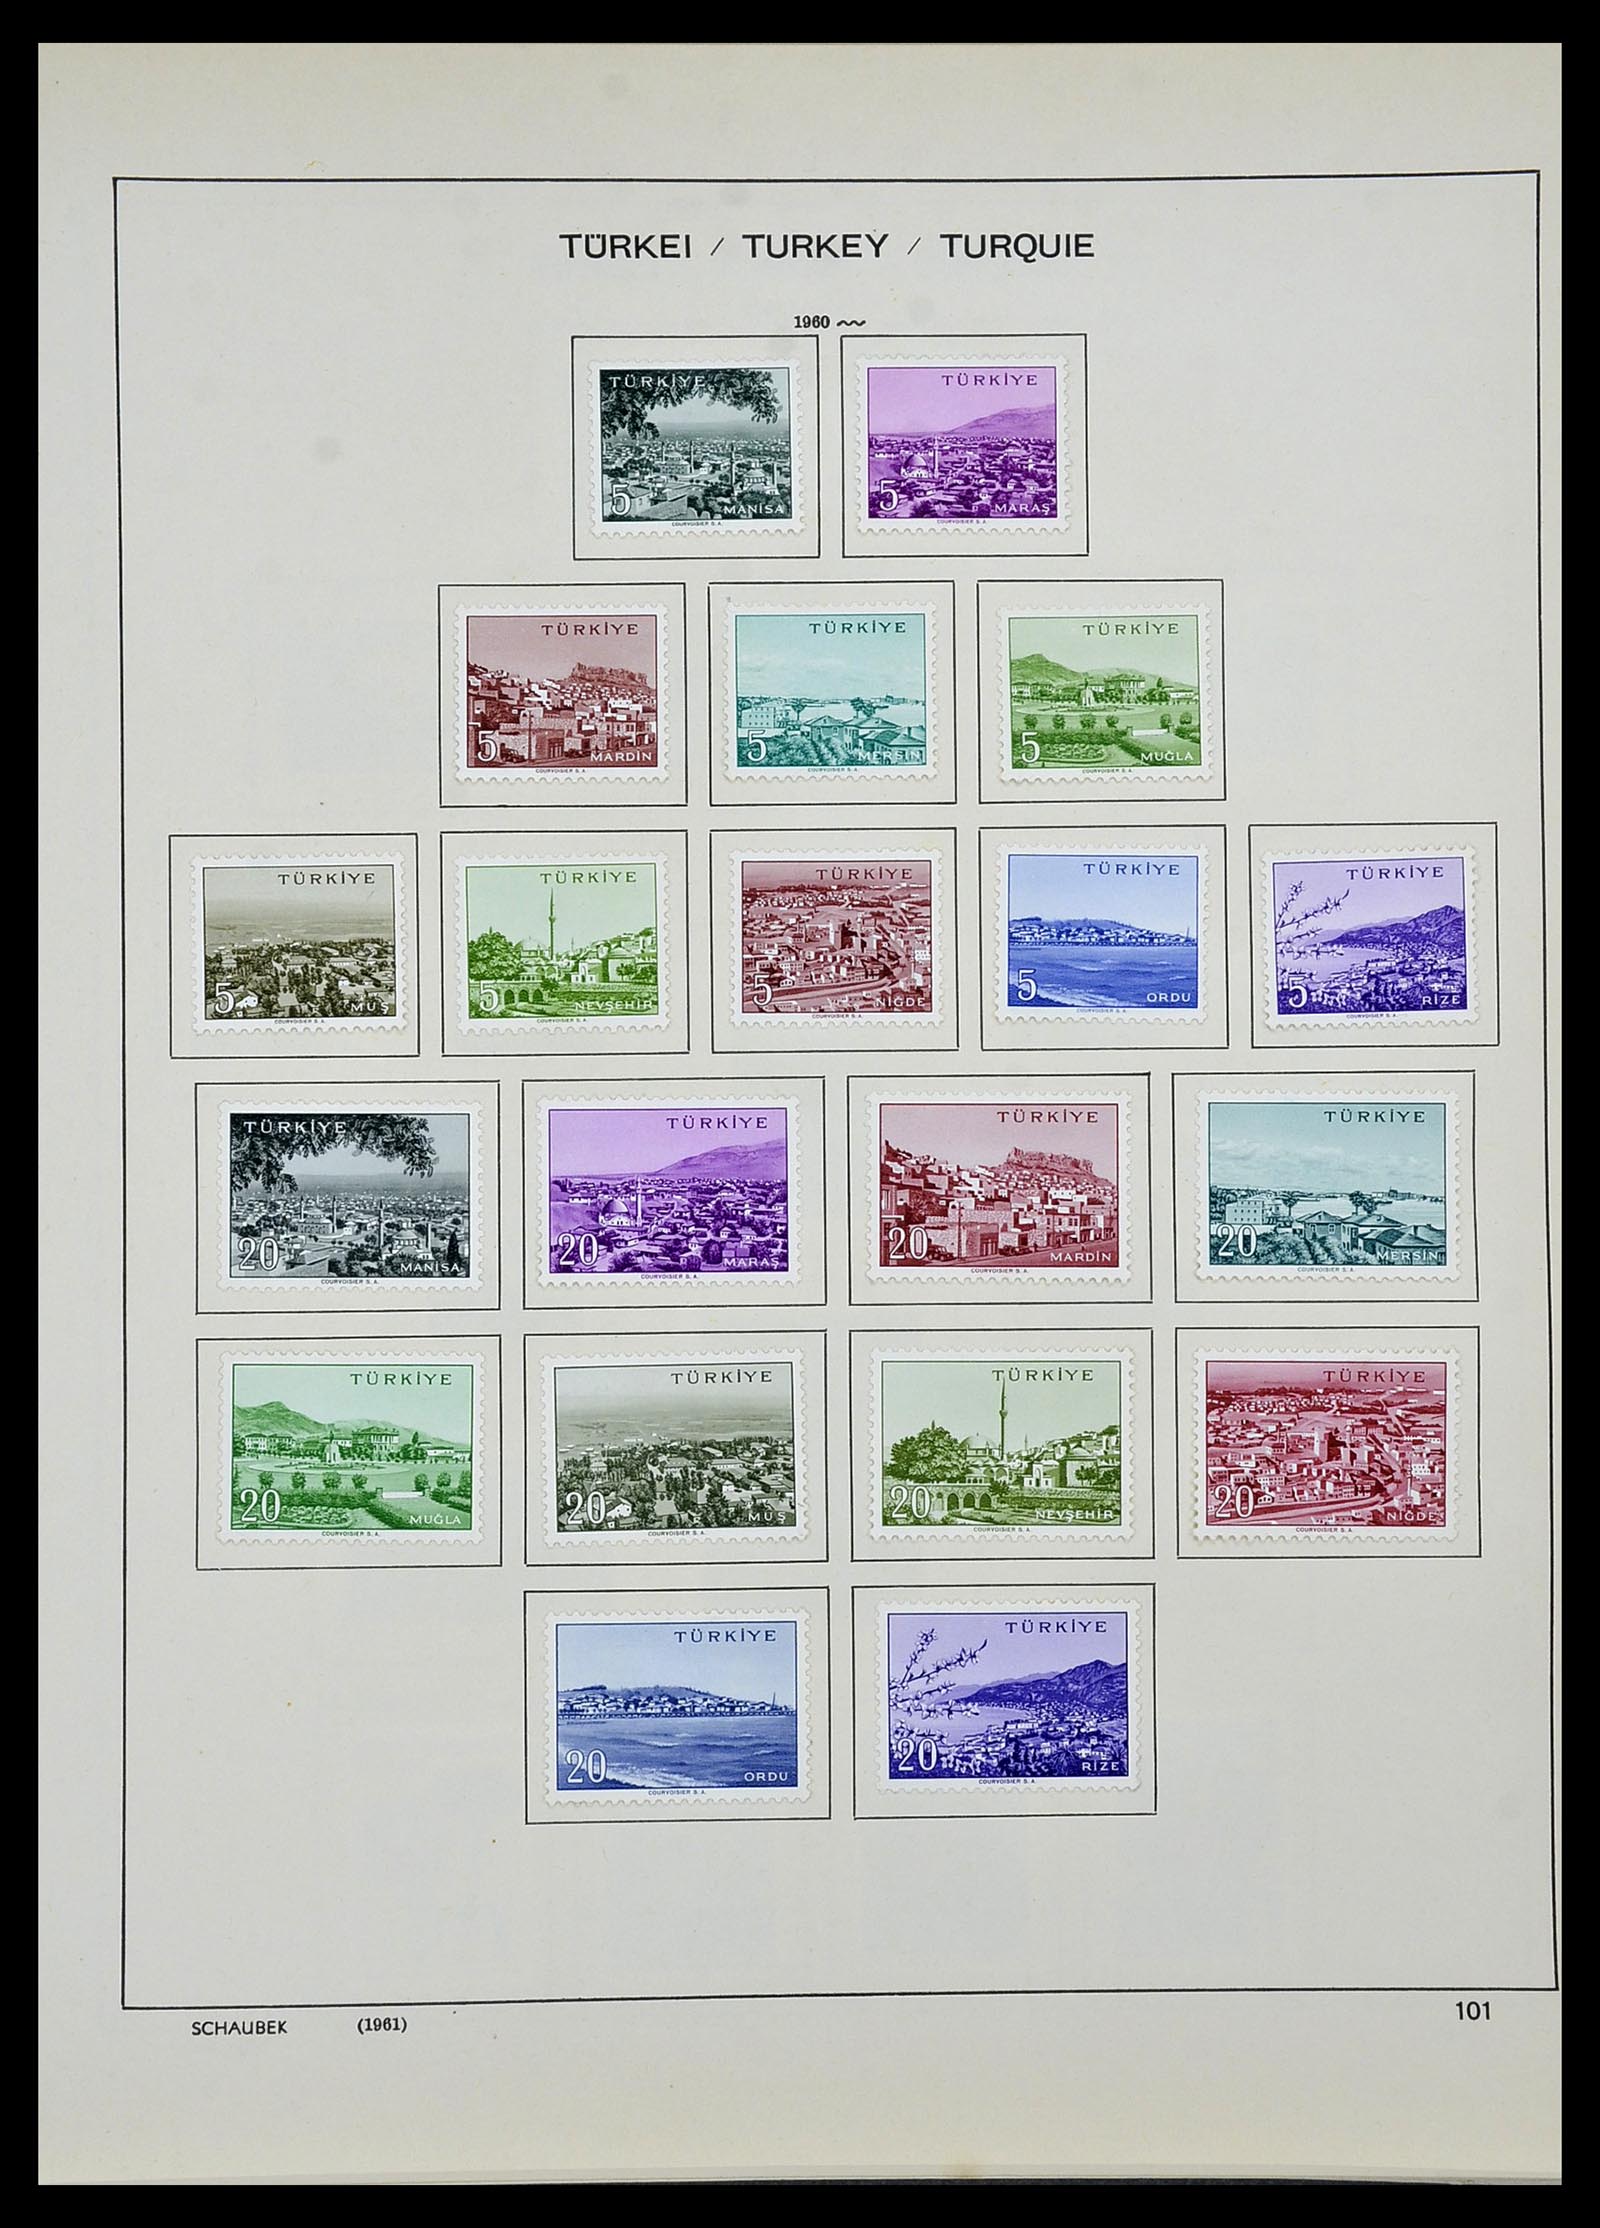 34426 072 - Stamp Collection 34426 Turkey 1863-1968.